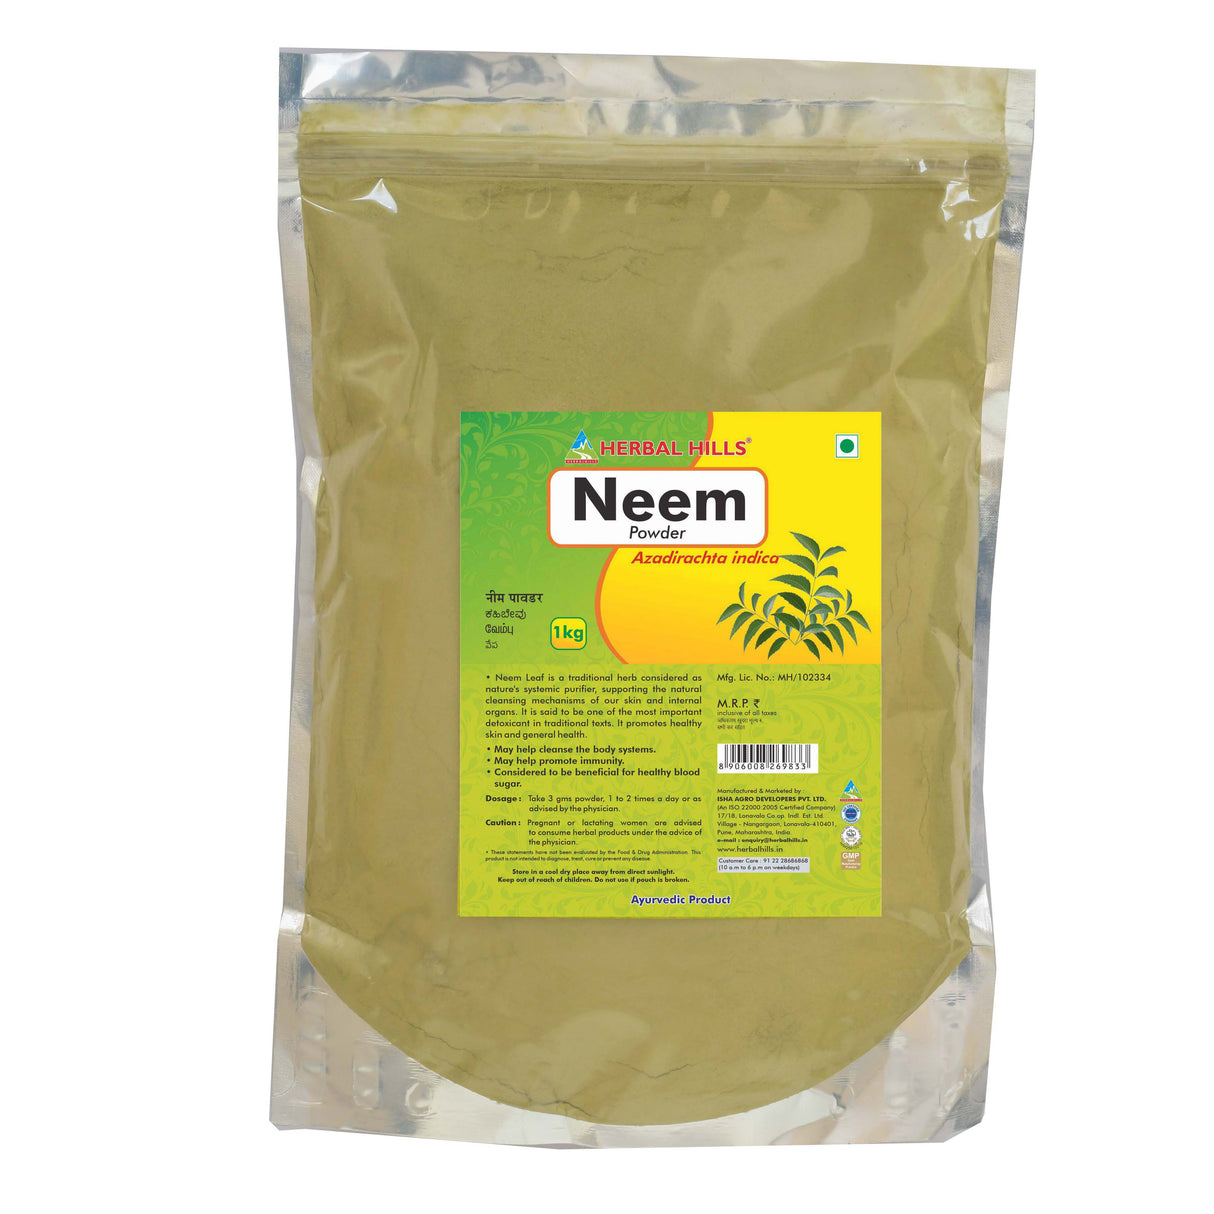 Buy Neem Powder for Skin and Immune Health